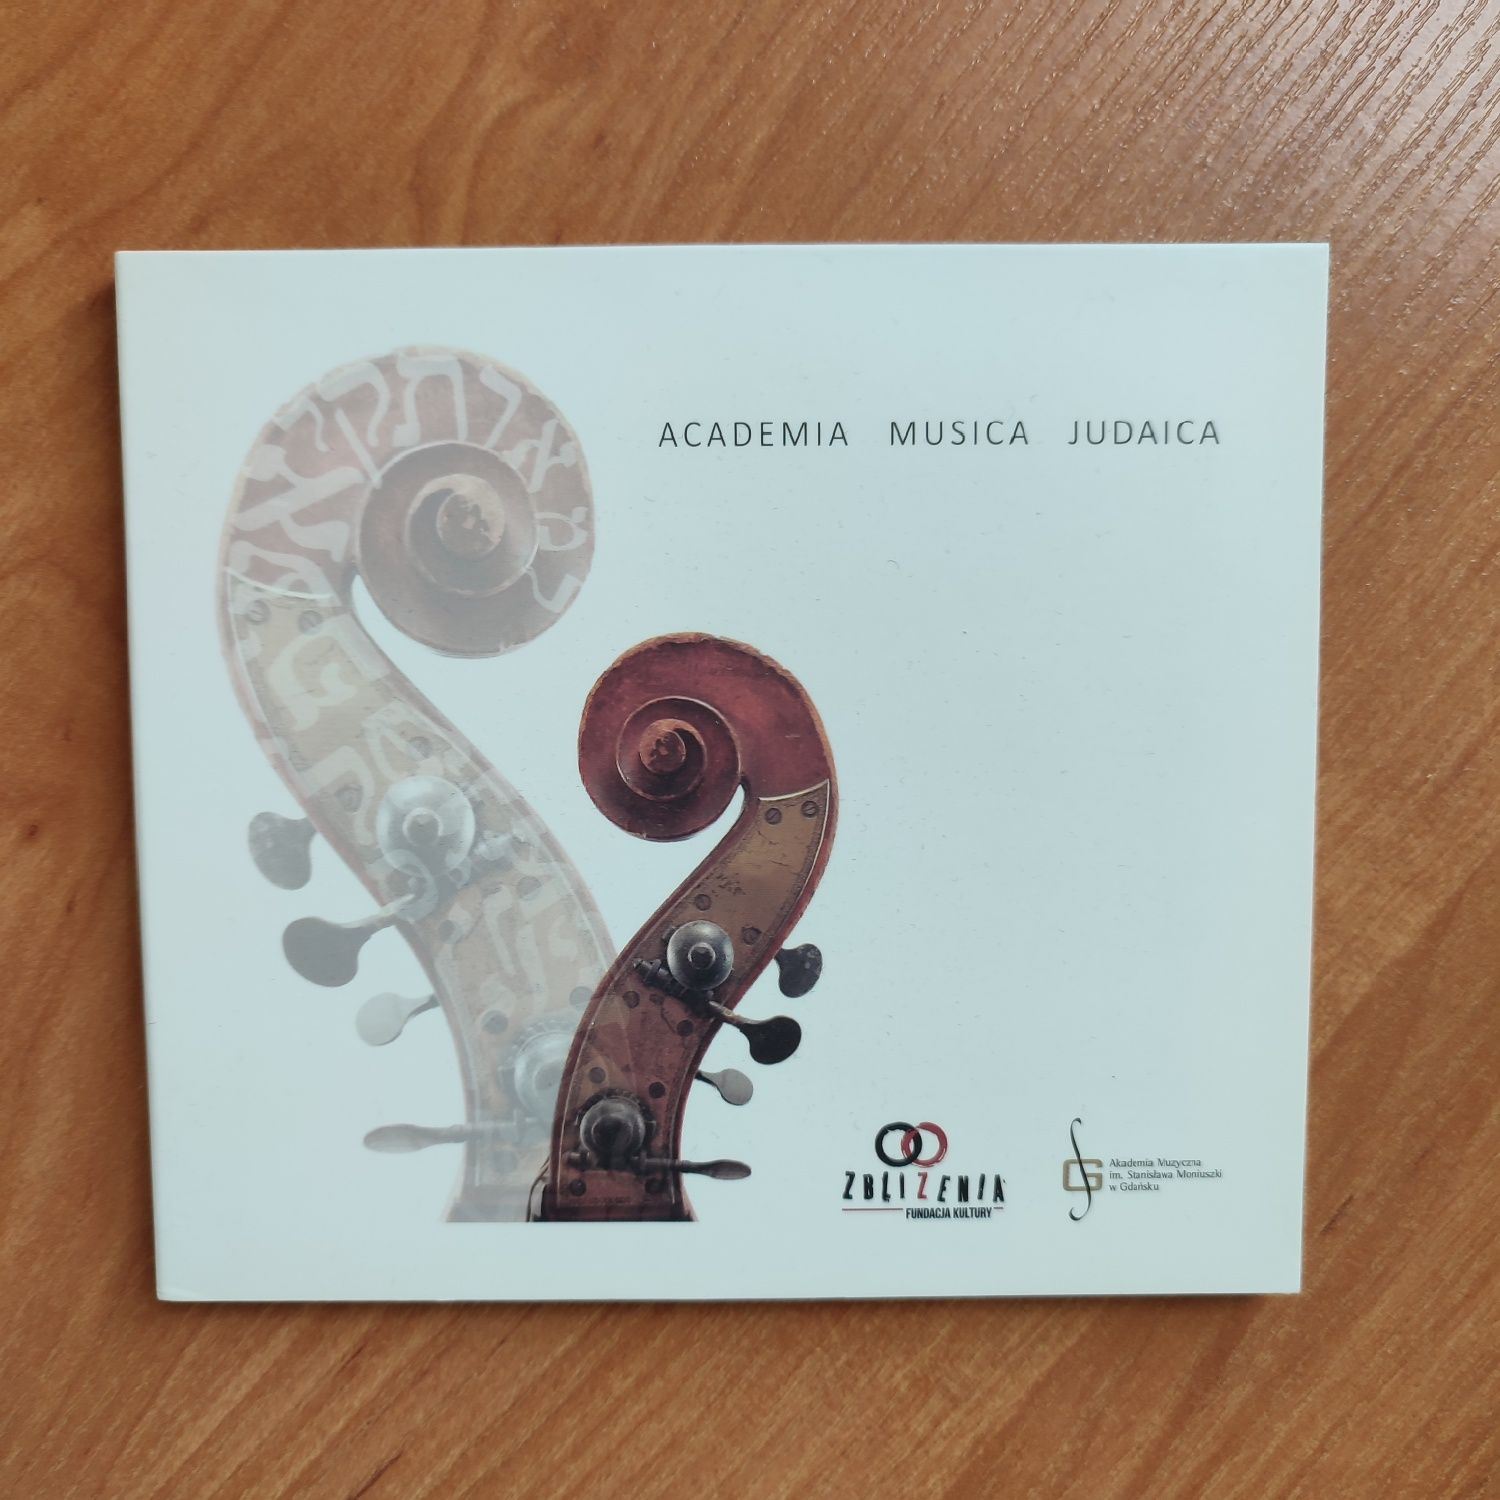 Płyta CD Academia Musica Judaica
Muzyka żydowska, Jewish music
Stan ba